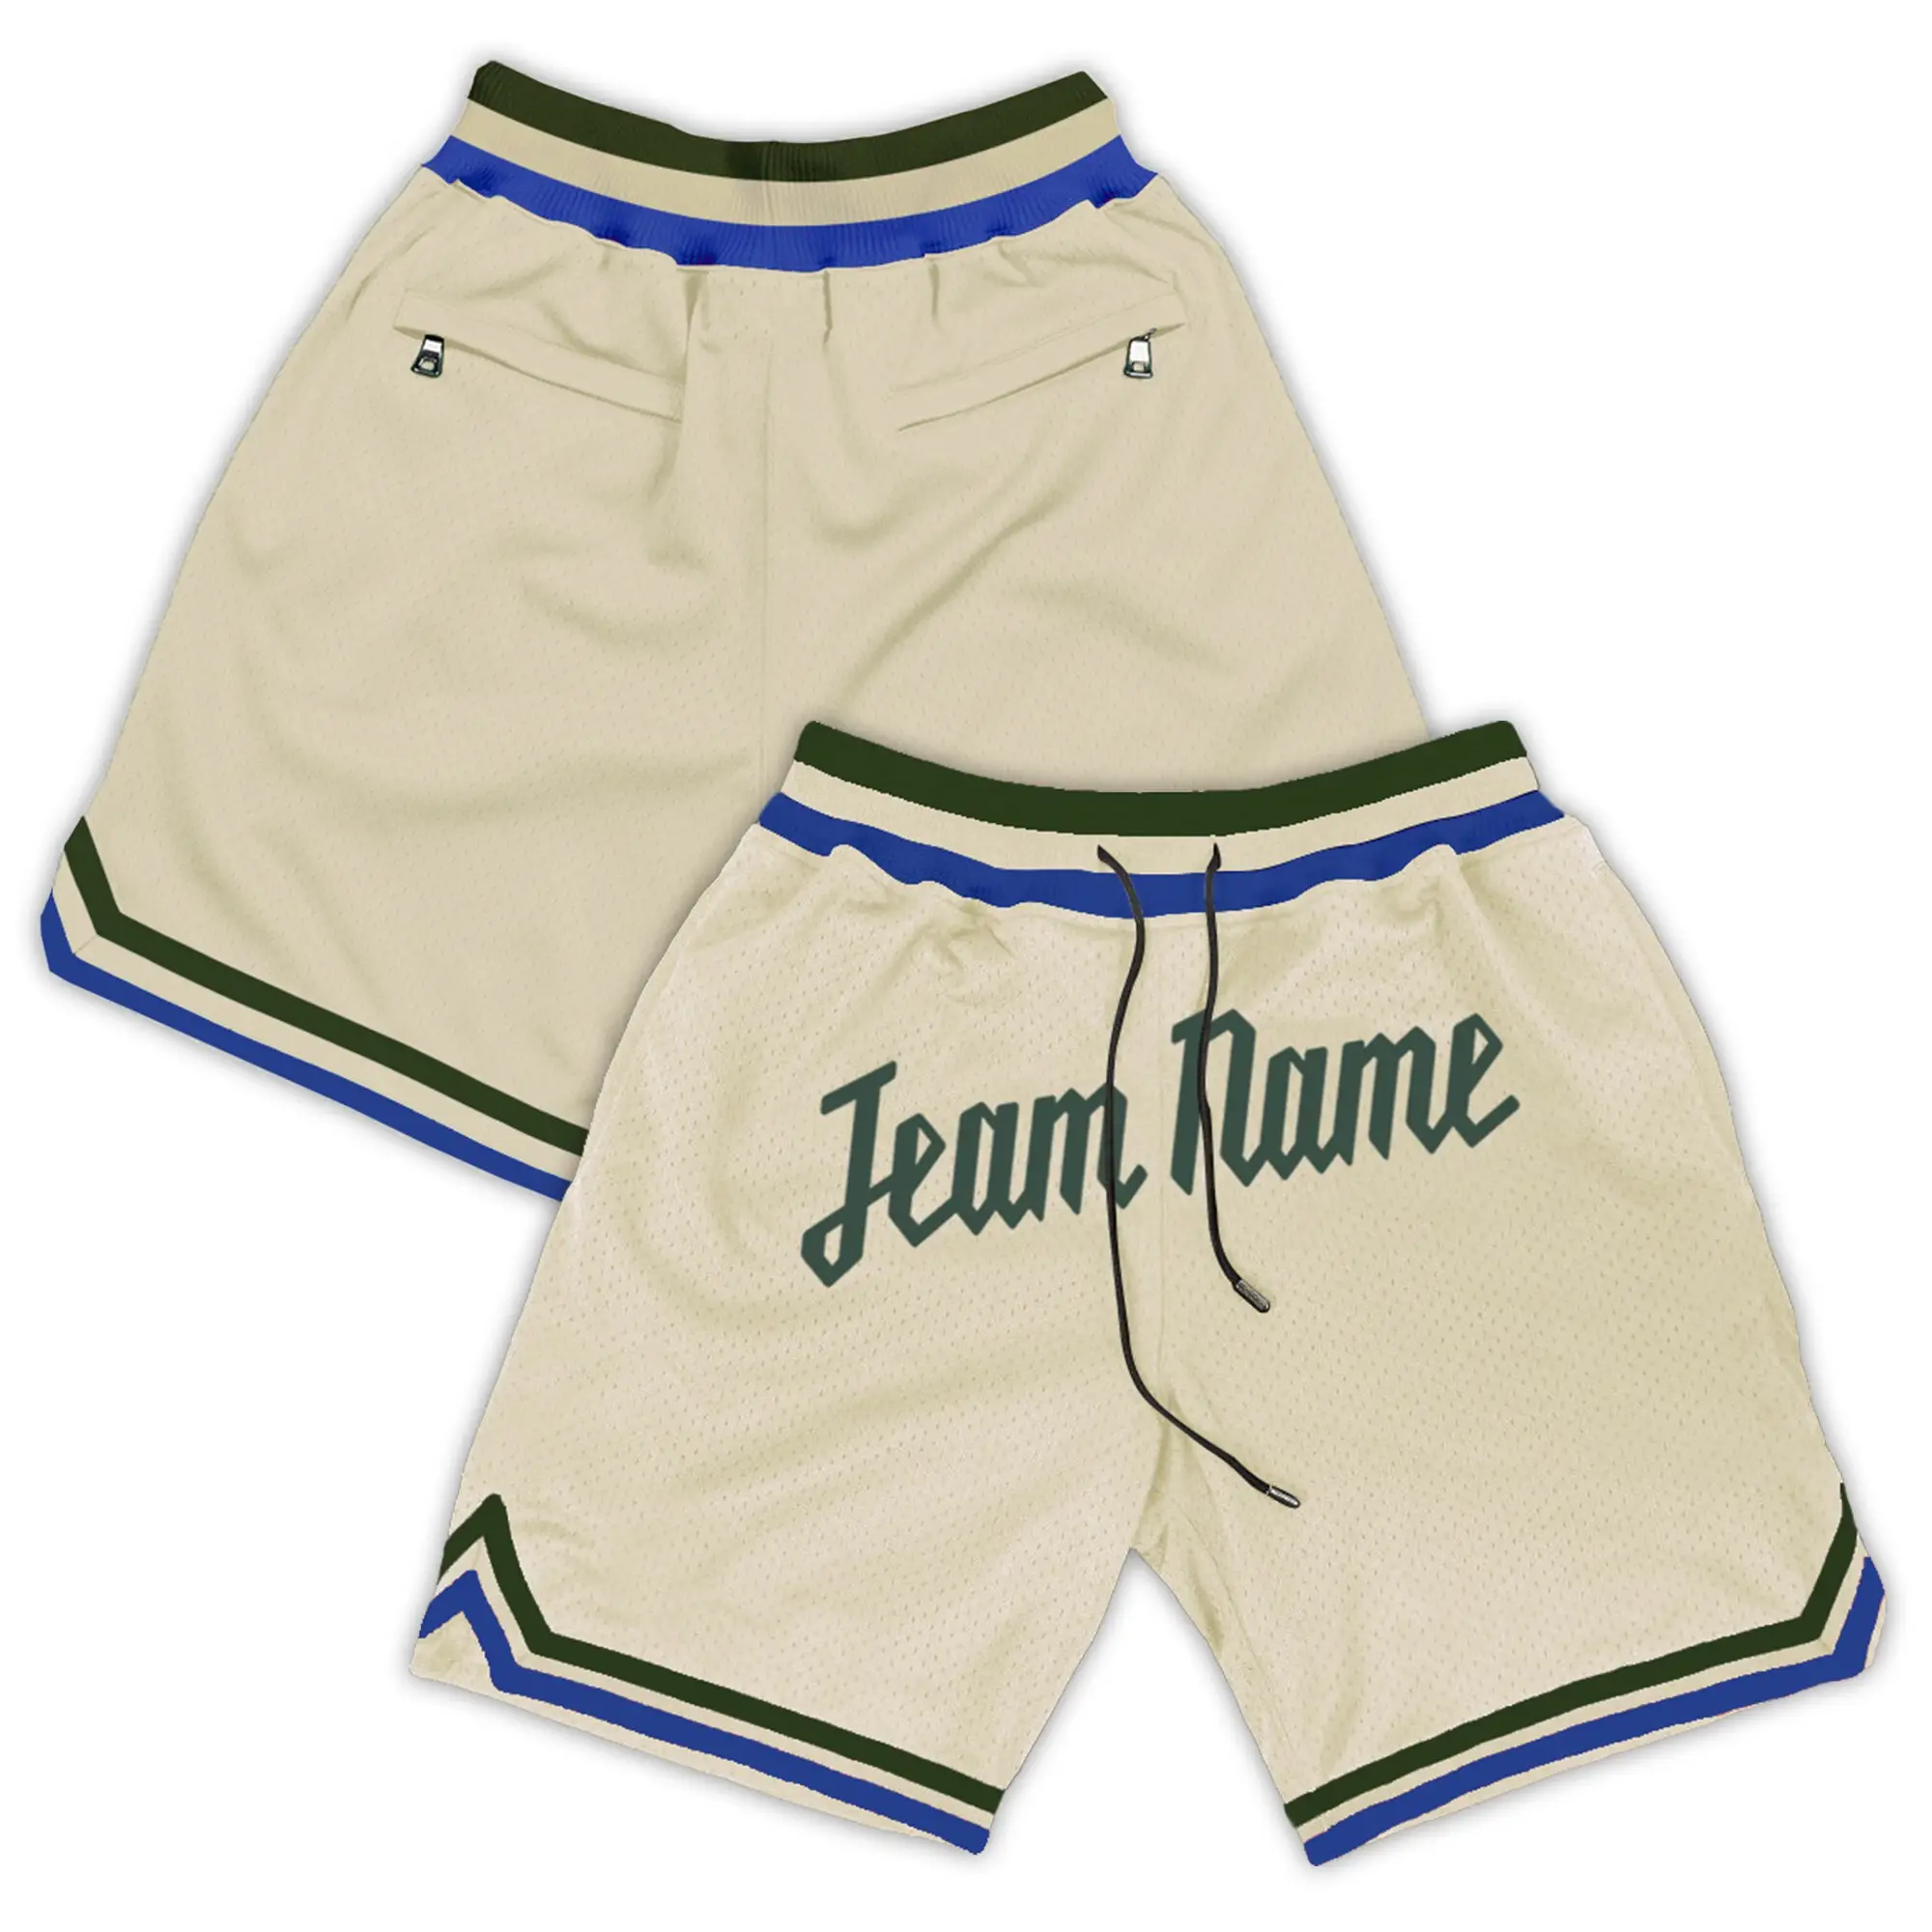 2022 wholesale high quality boy's blank bulk sport's basketball shorts with zipper pockets